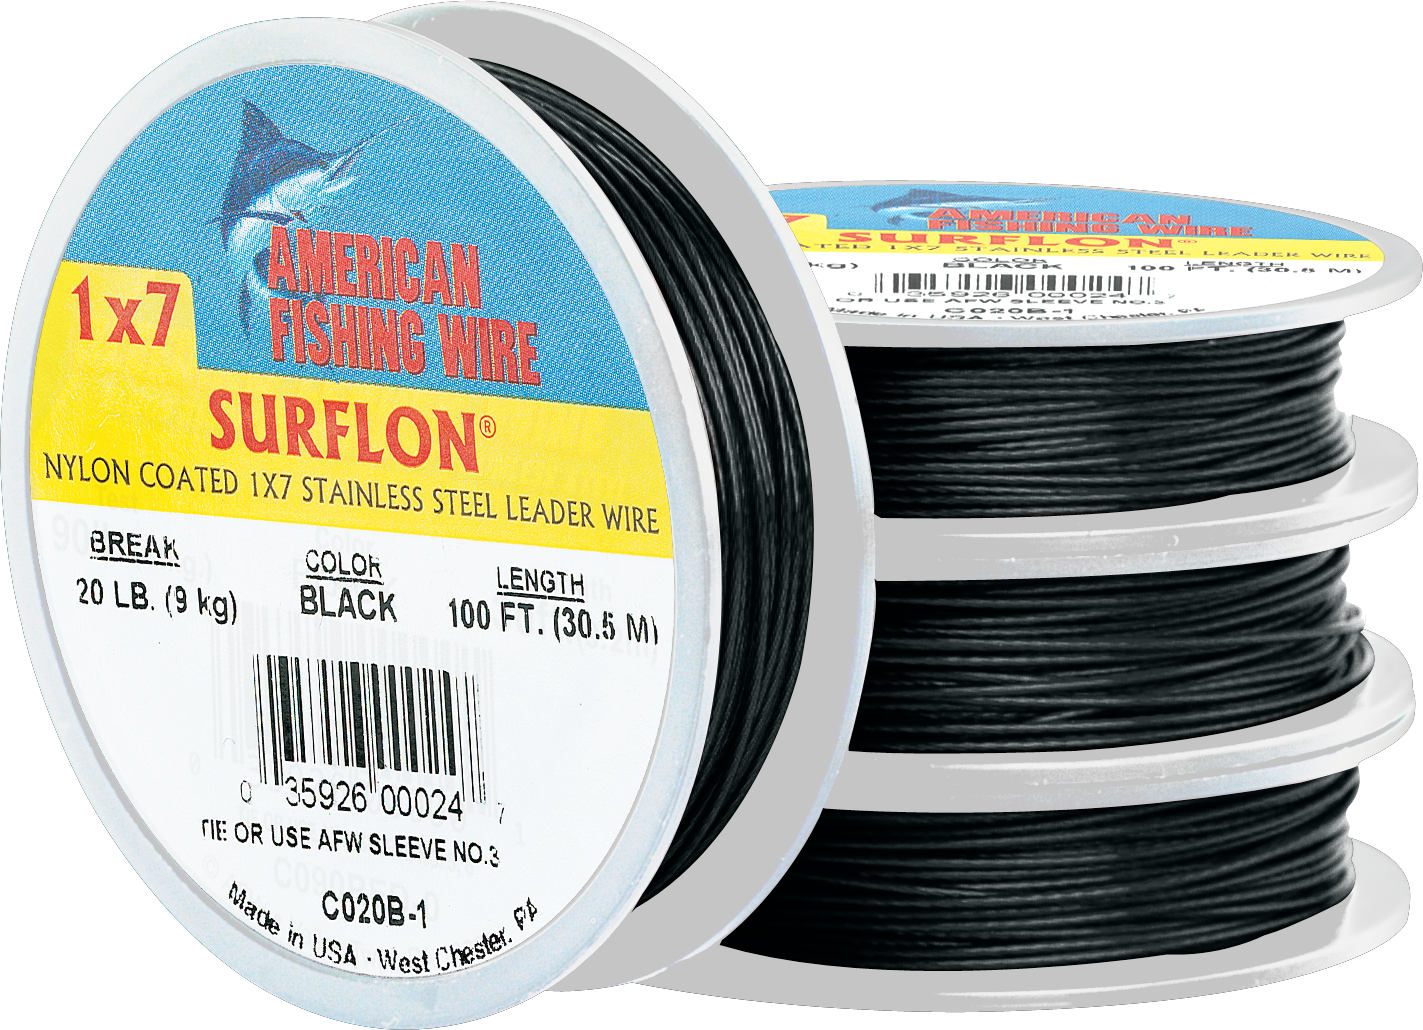 Big Catch Fishing Tackle - Surflon Nylon Coated Wire